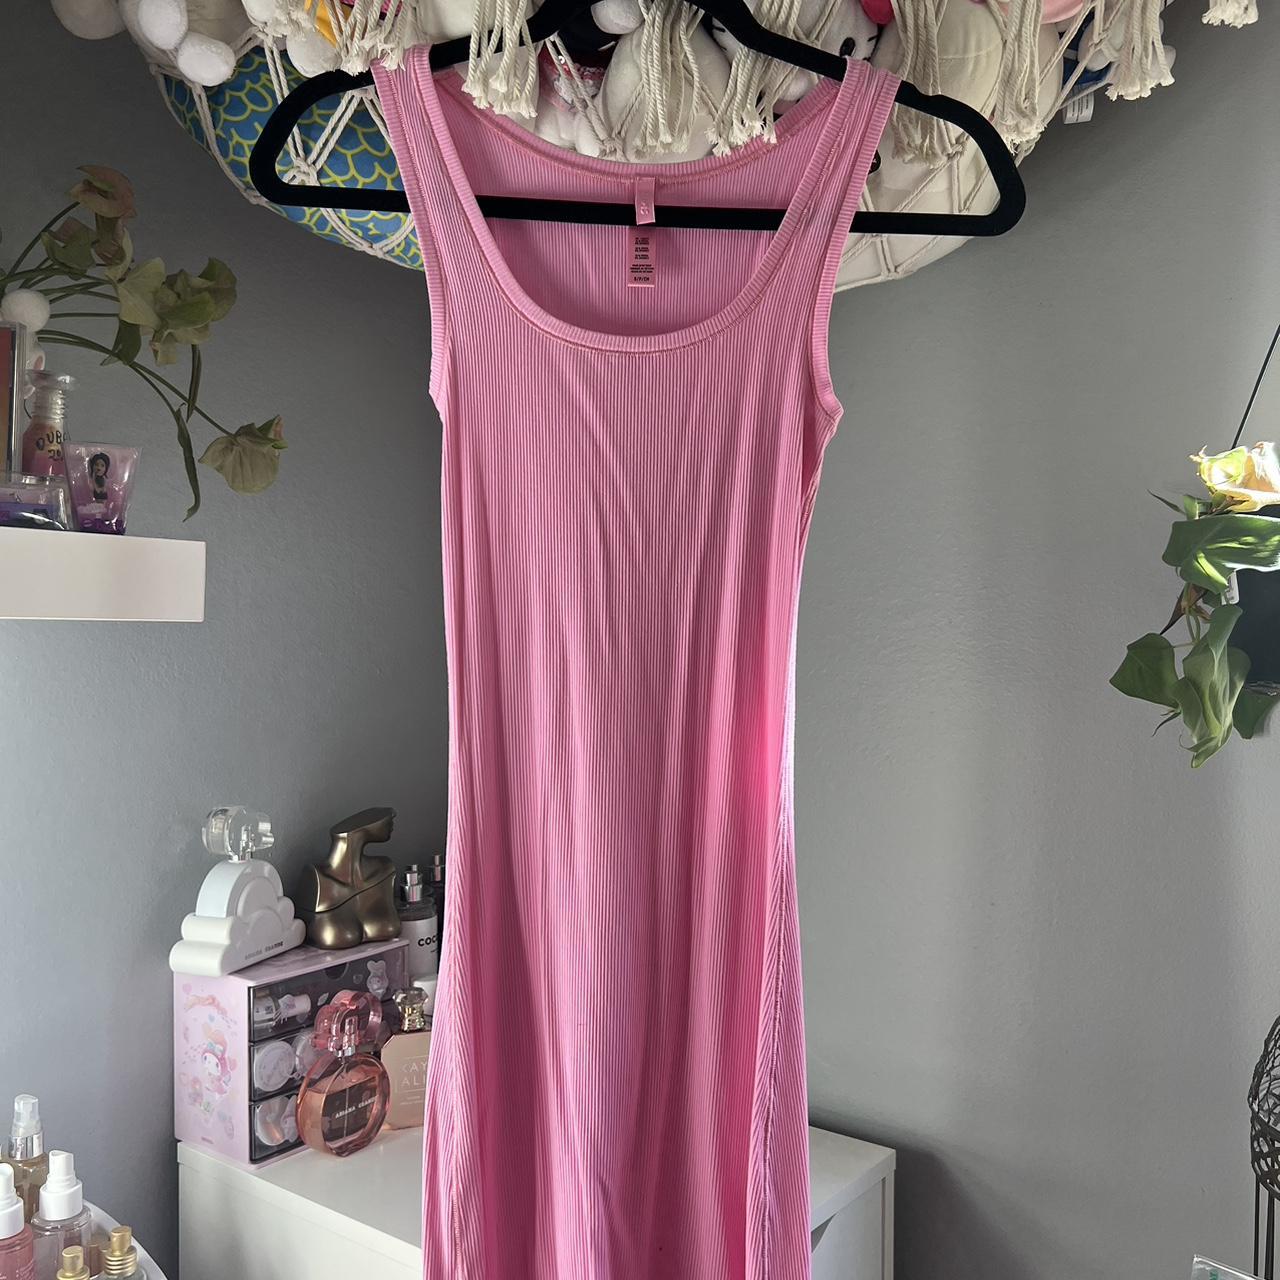 Pink Soft Lounge Minidress by SKIMS on Sale